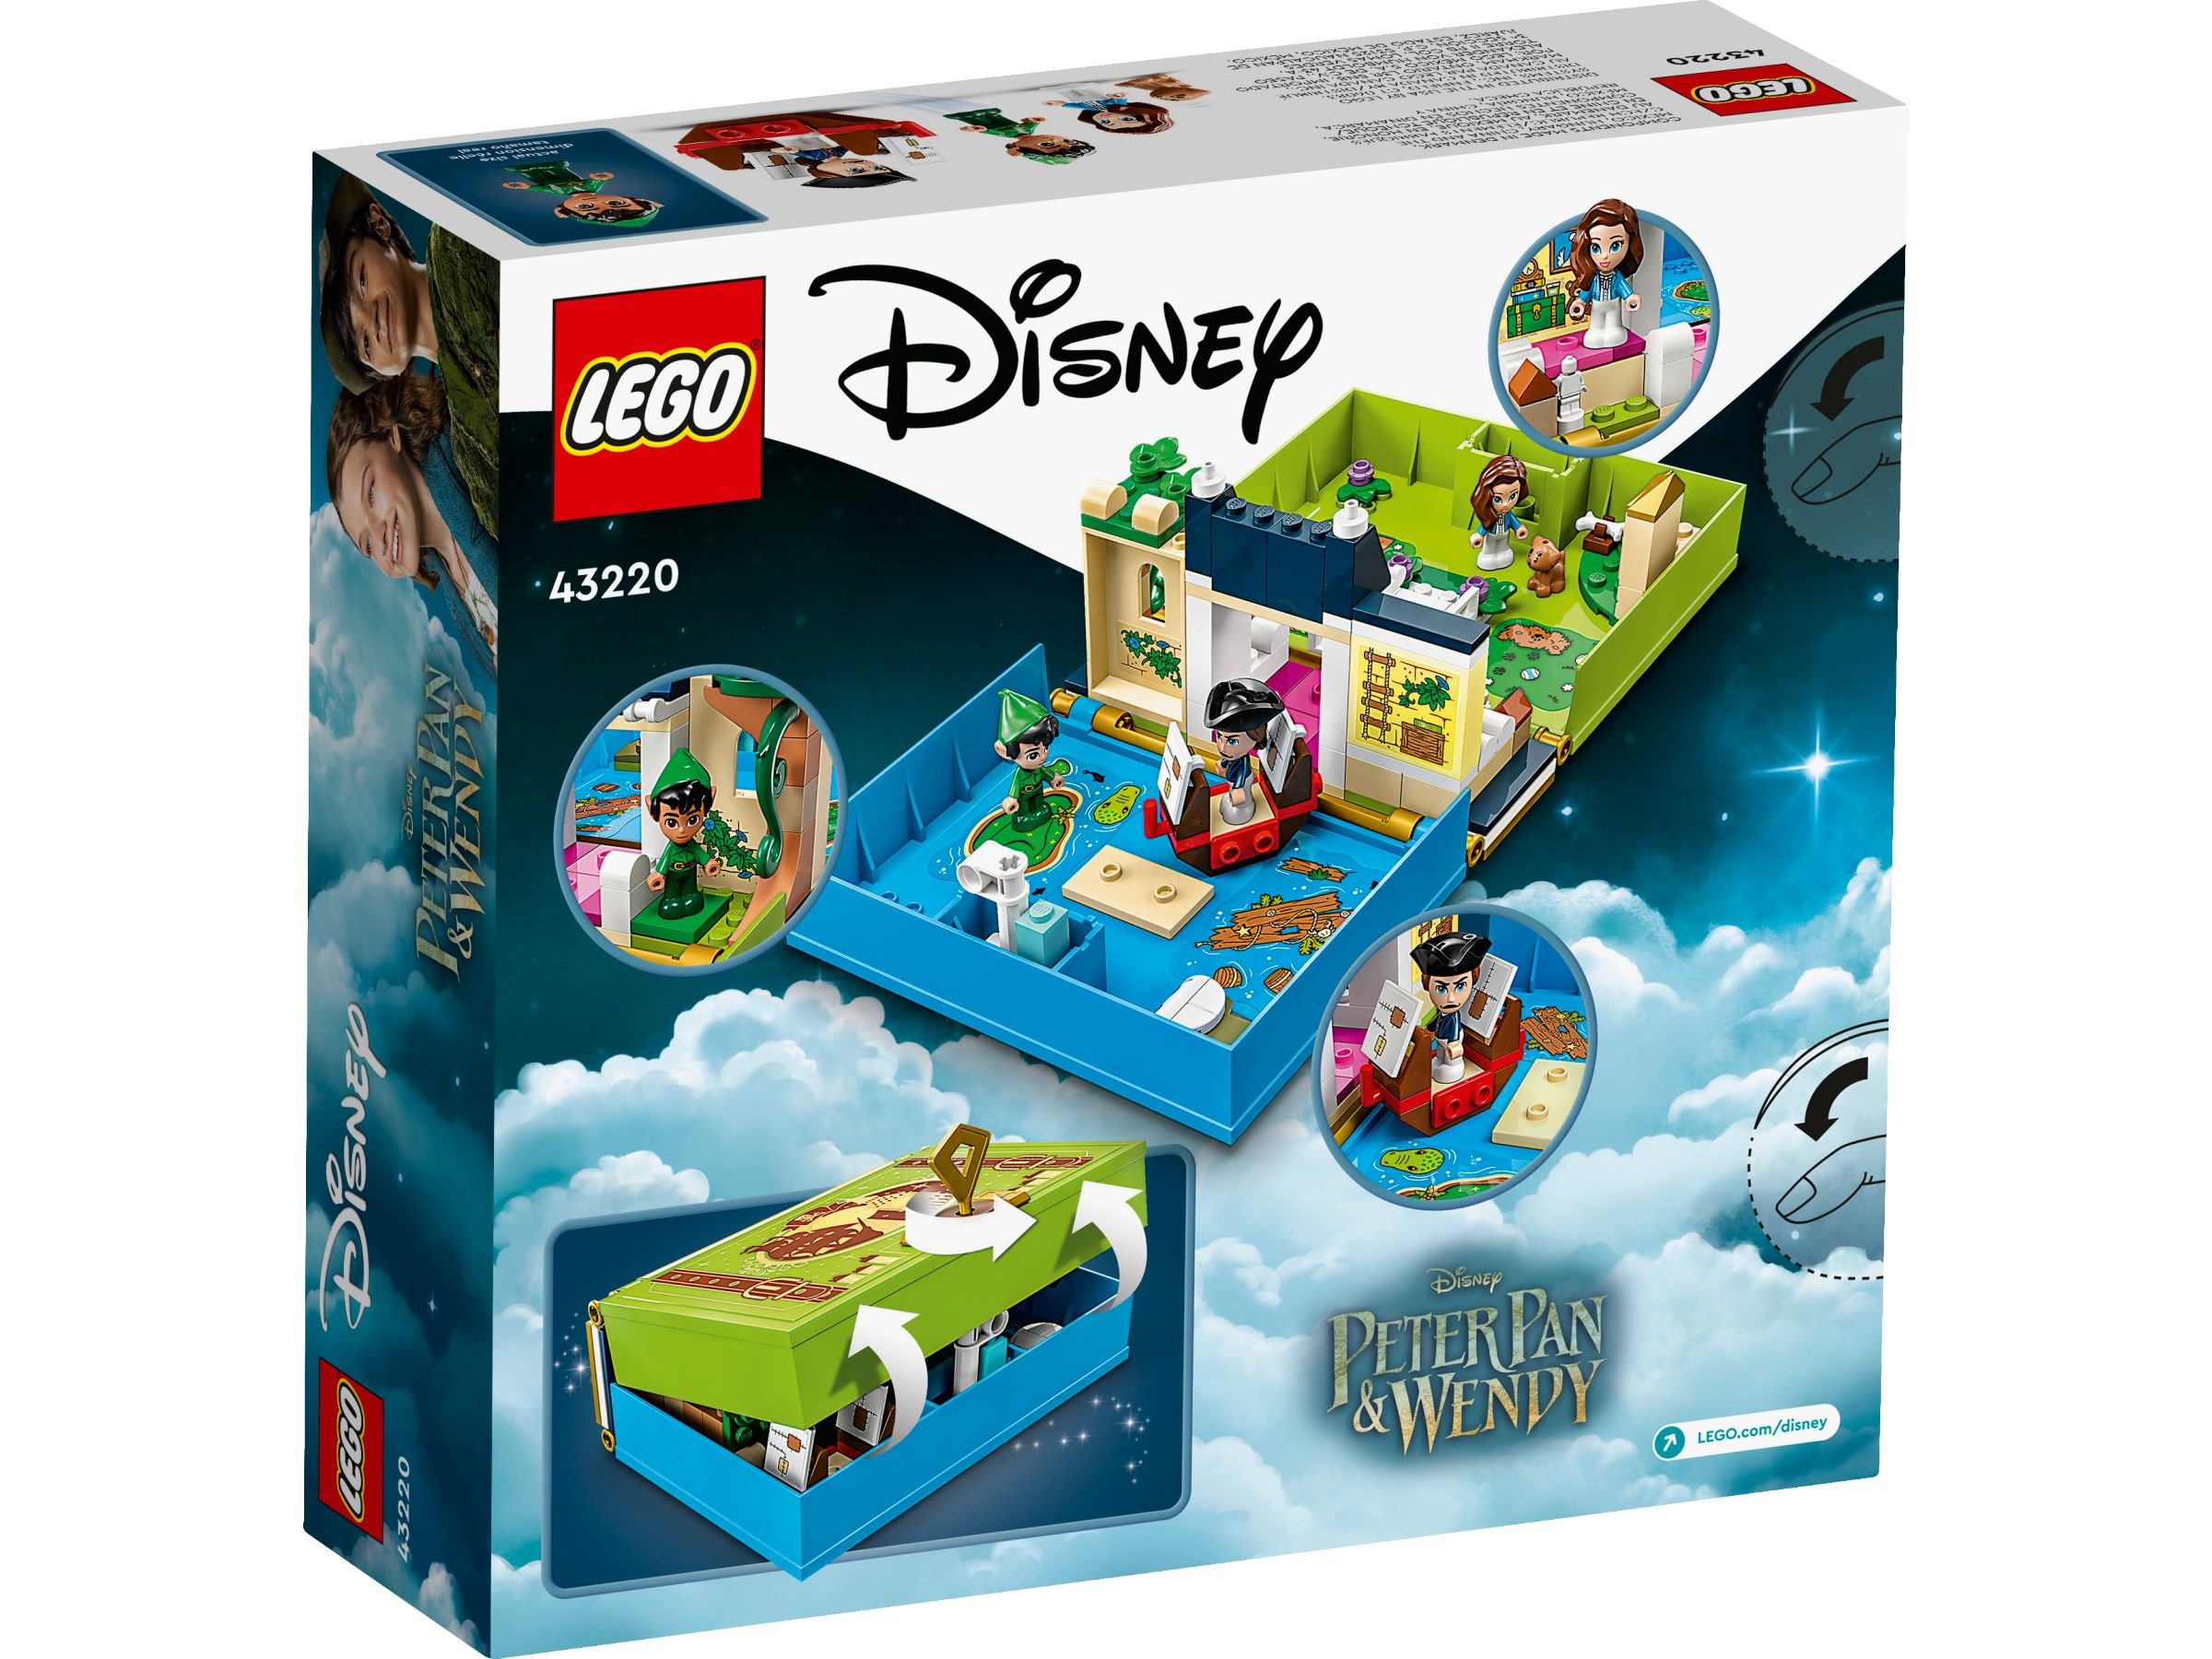 LEGO Disney 43220 Peter Pan & Wendy – Märchenbuch-Abenteuer LEGO_43220_alt8.jpg